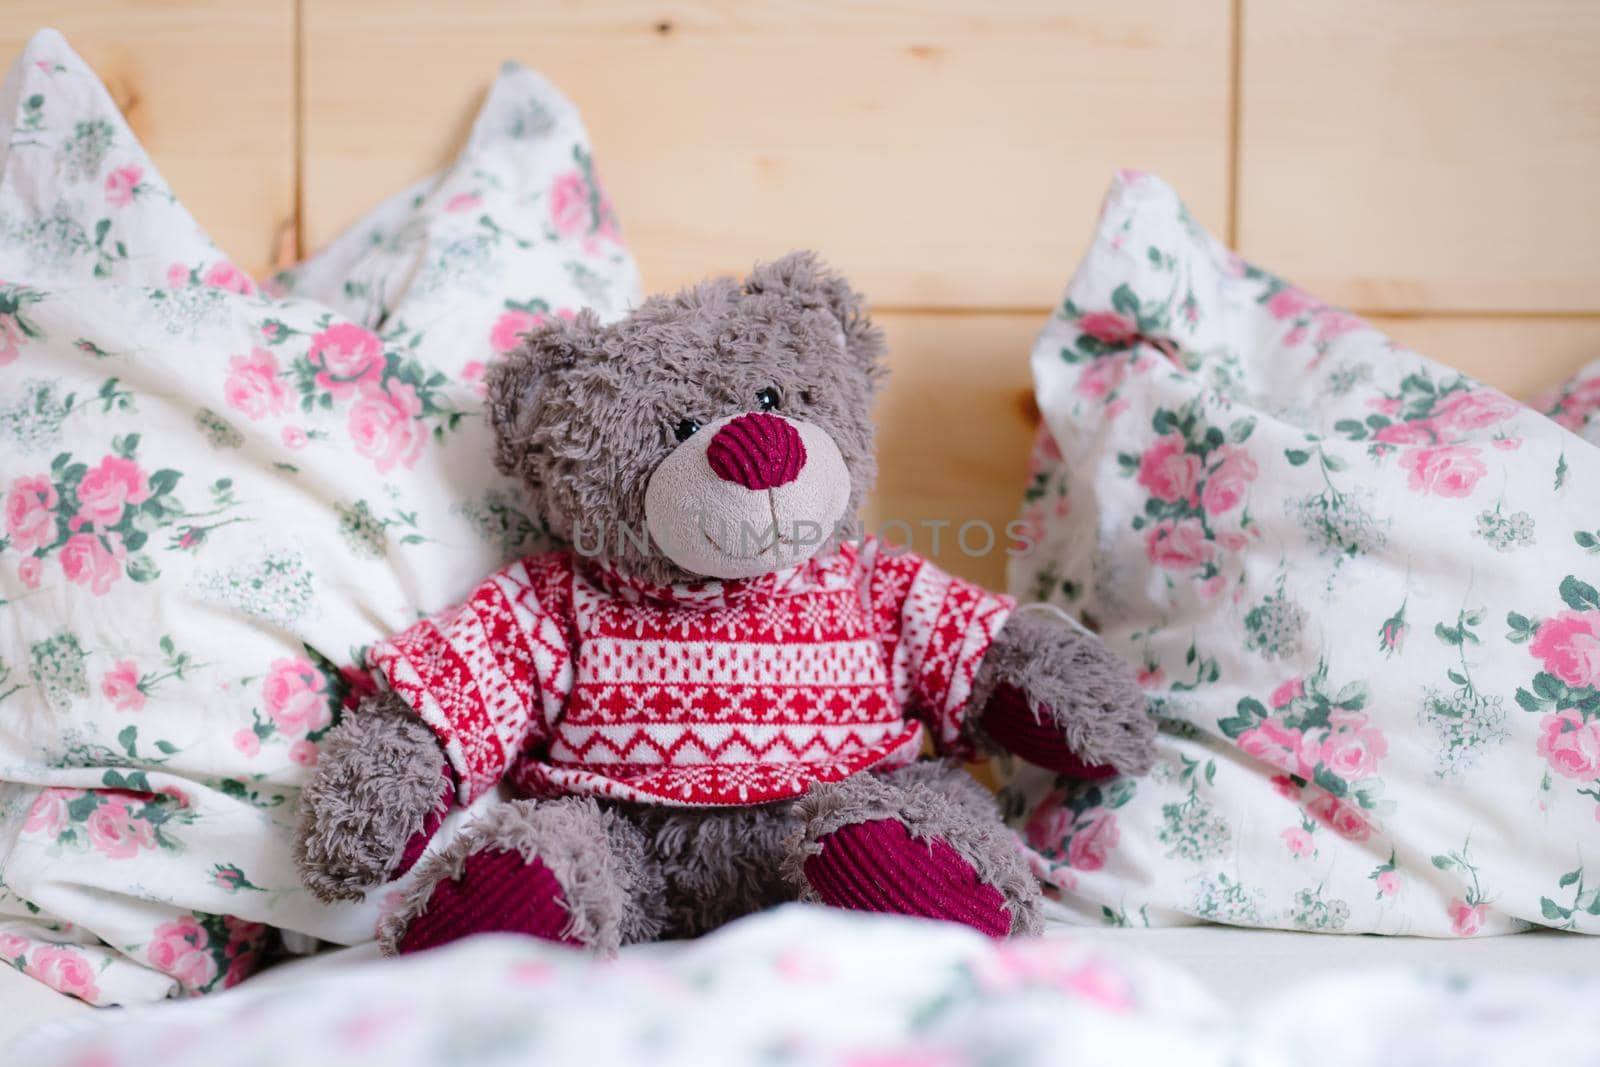 Teddy dream concept: Teddy bear is sitting in a wooden bed by Daxenbichler